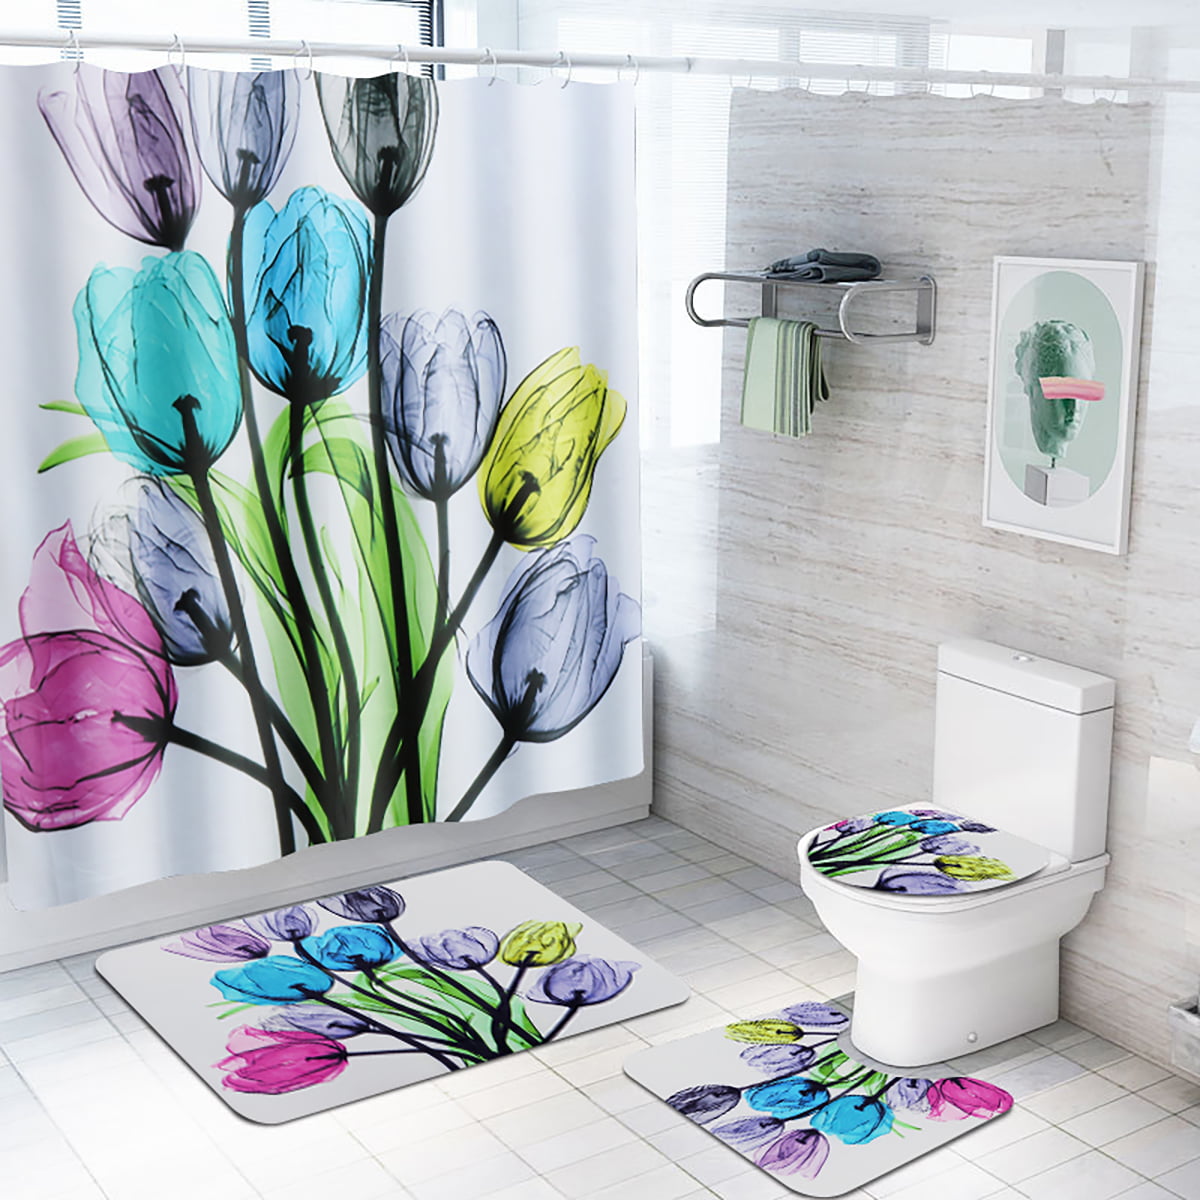 Details about   Flower Design Bathroom Waterproof Fabric Shower Curtain & Hooks Set Bathmat NEW 